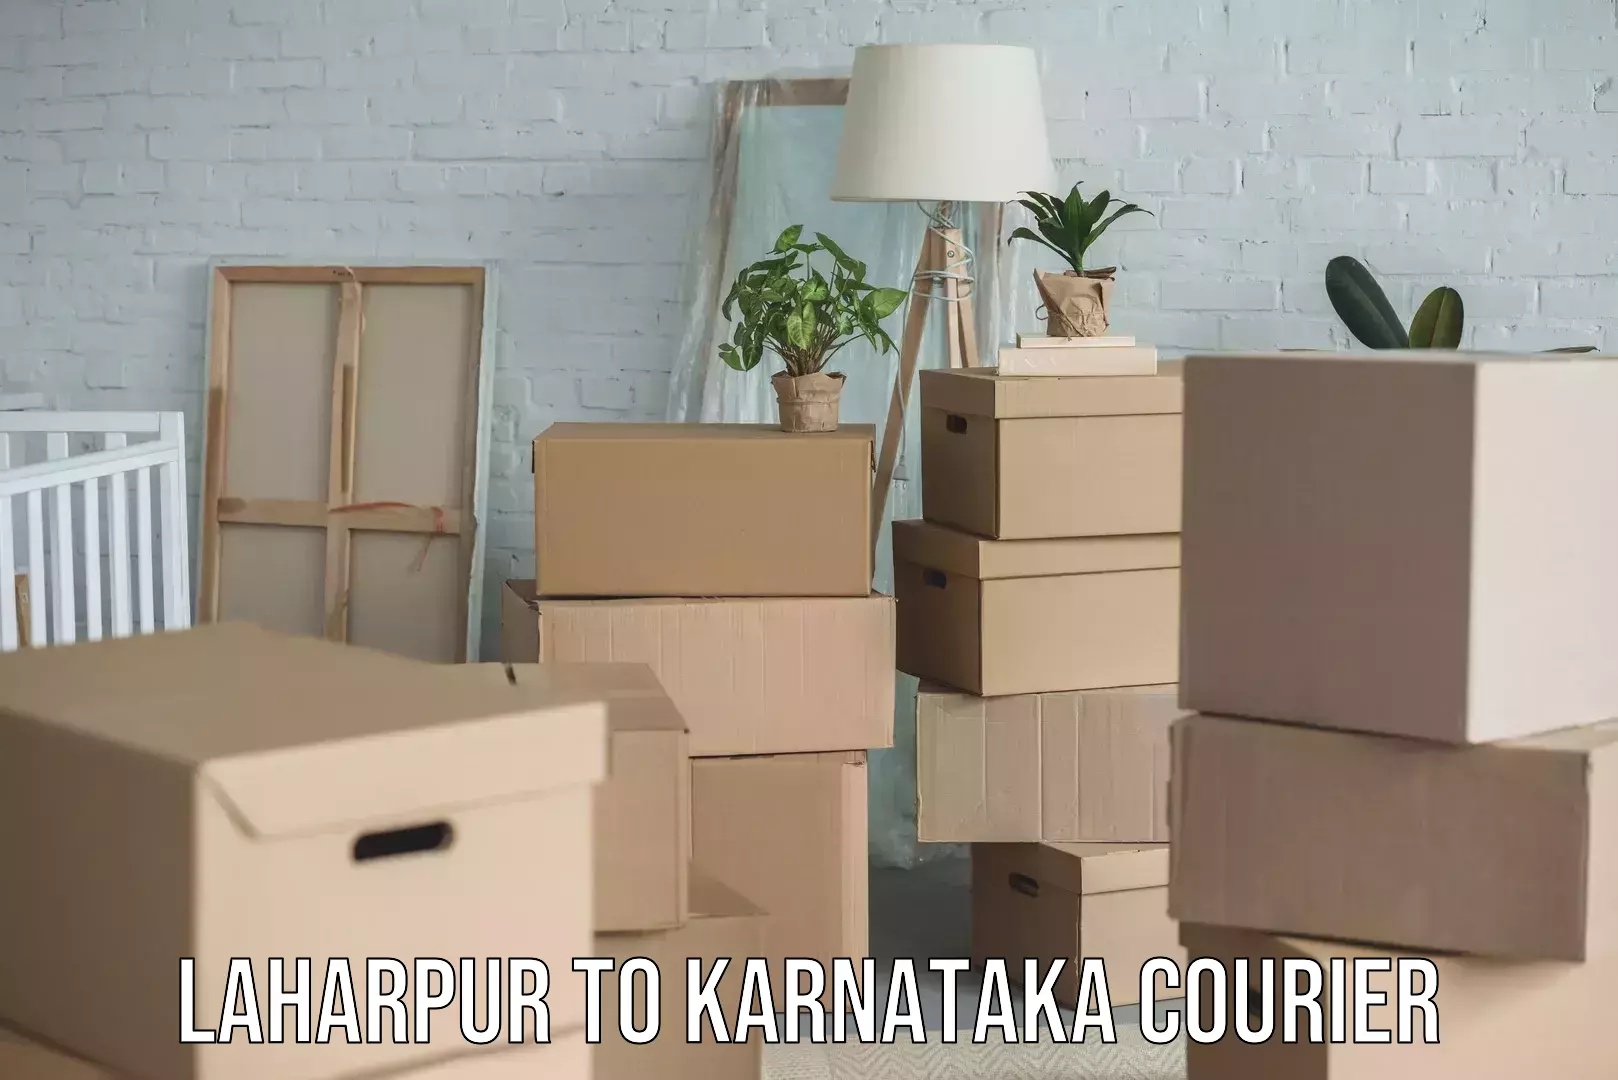 Furniture moving experts Laharpur to Karnataka